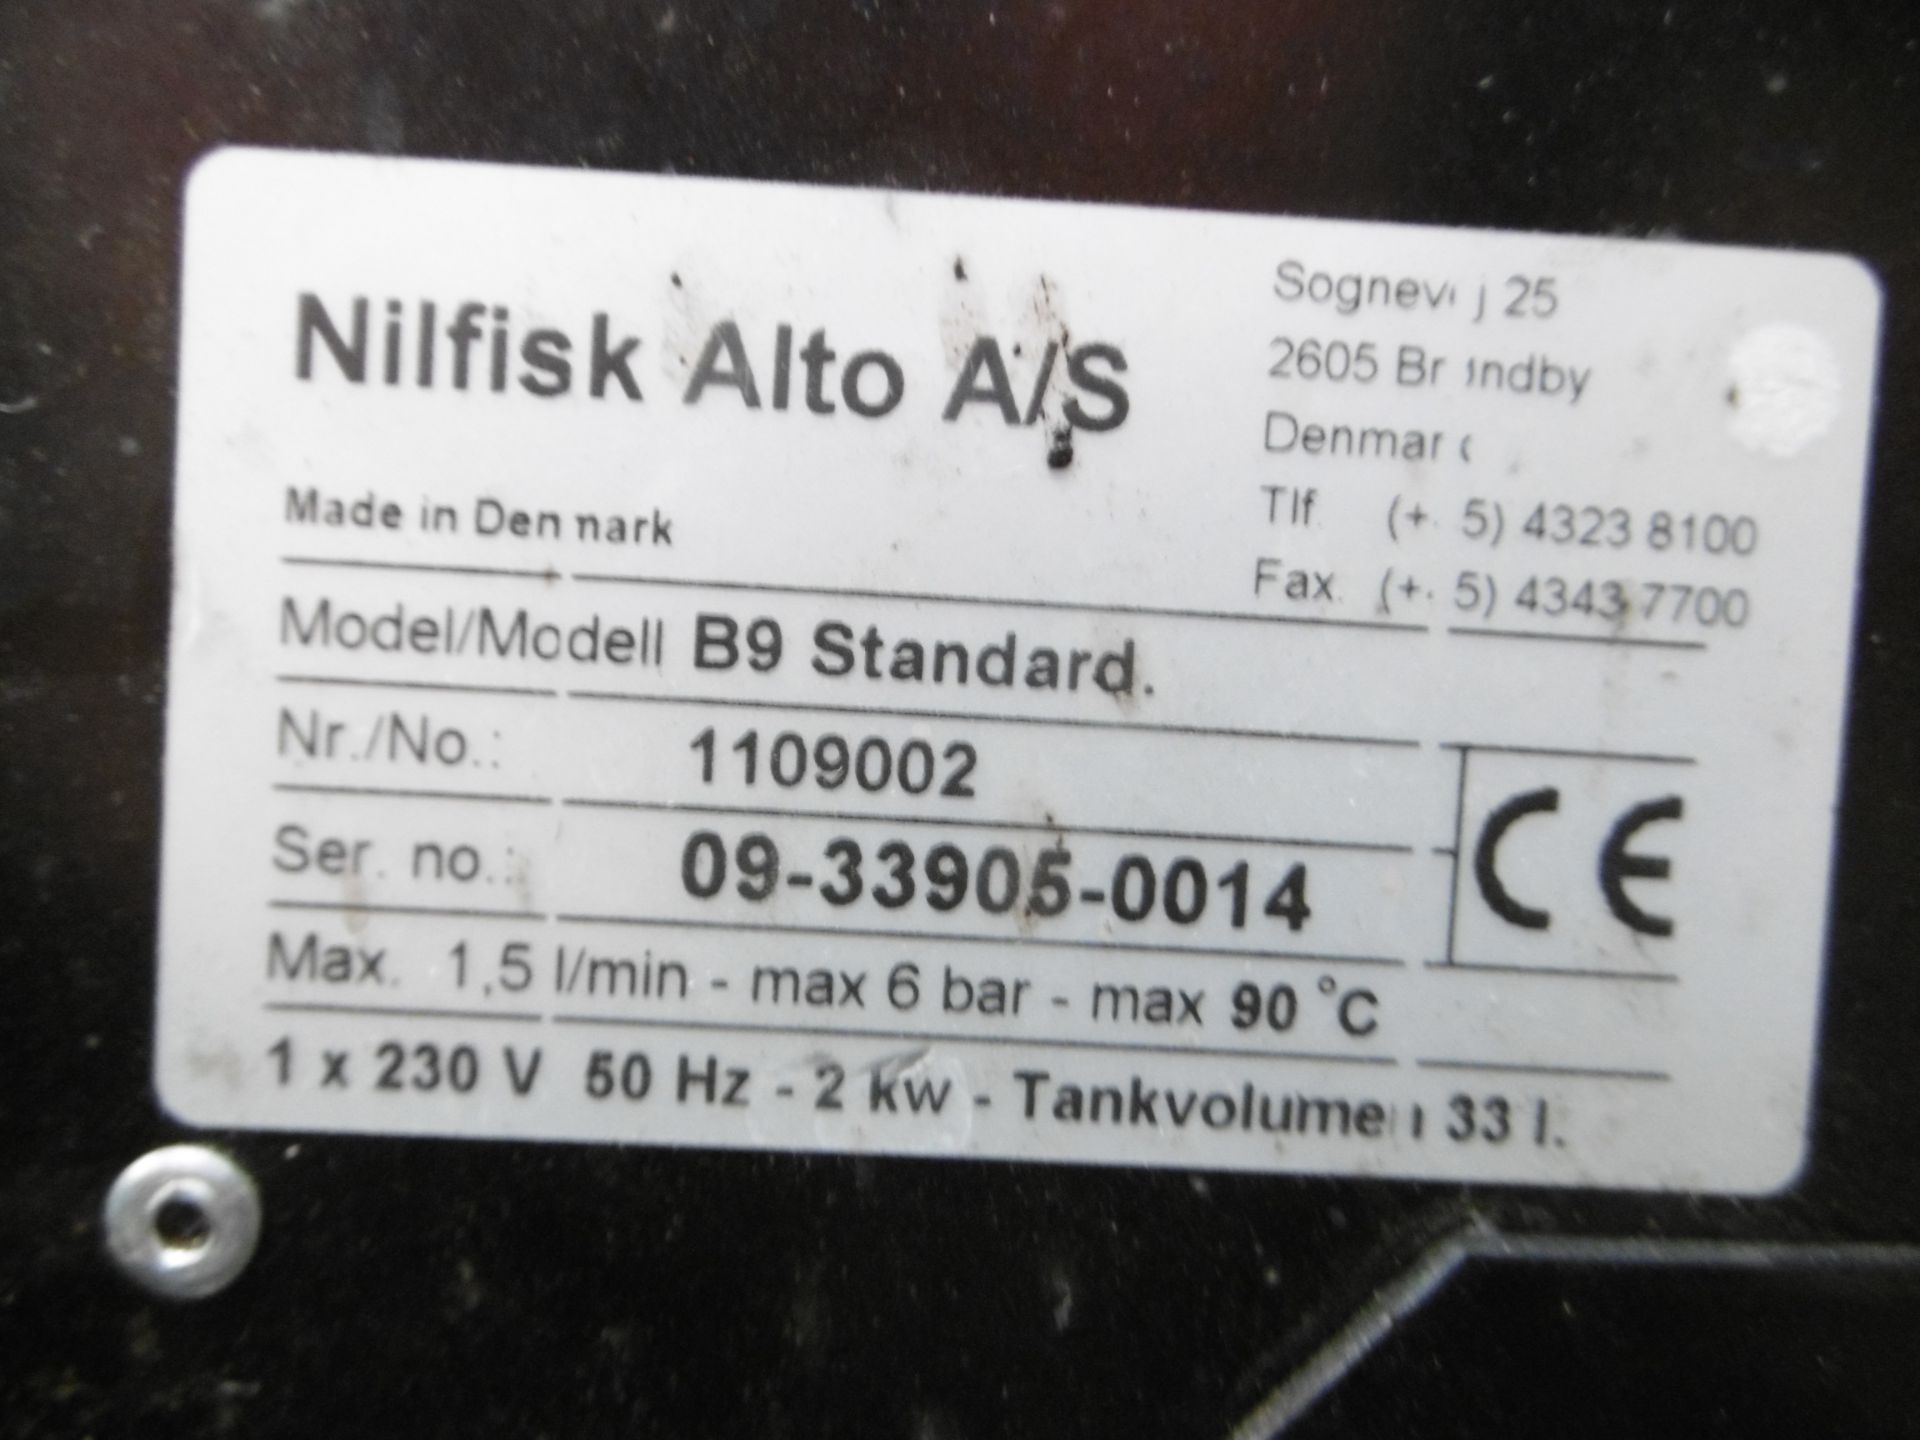 Nilfisk Alto B9 Standard Parts Washer - Image 8 of 8